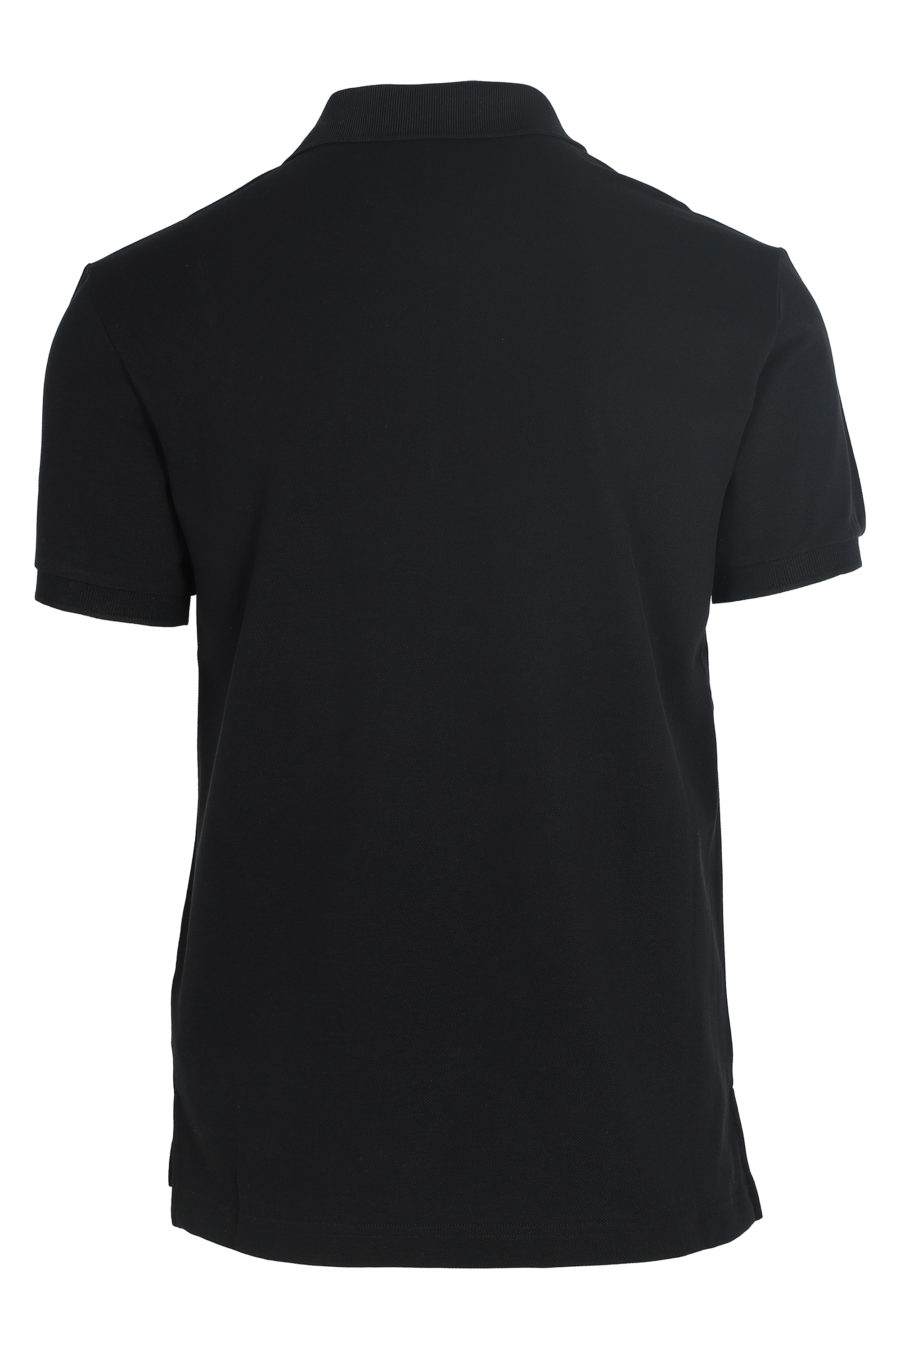 Black polo shirt with gold logo - IMG 5985